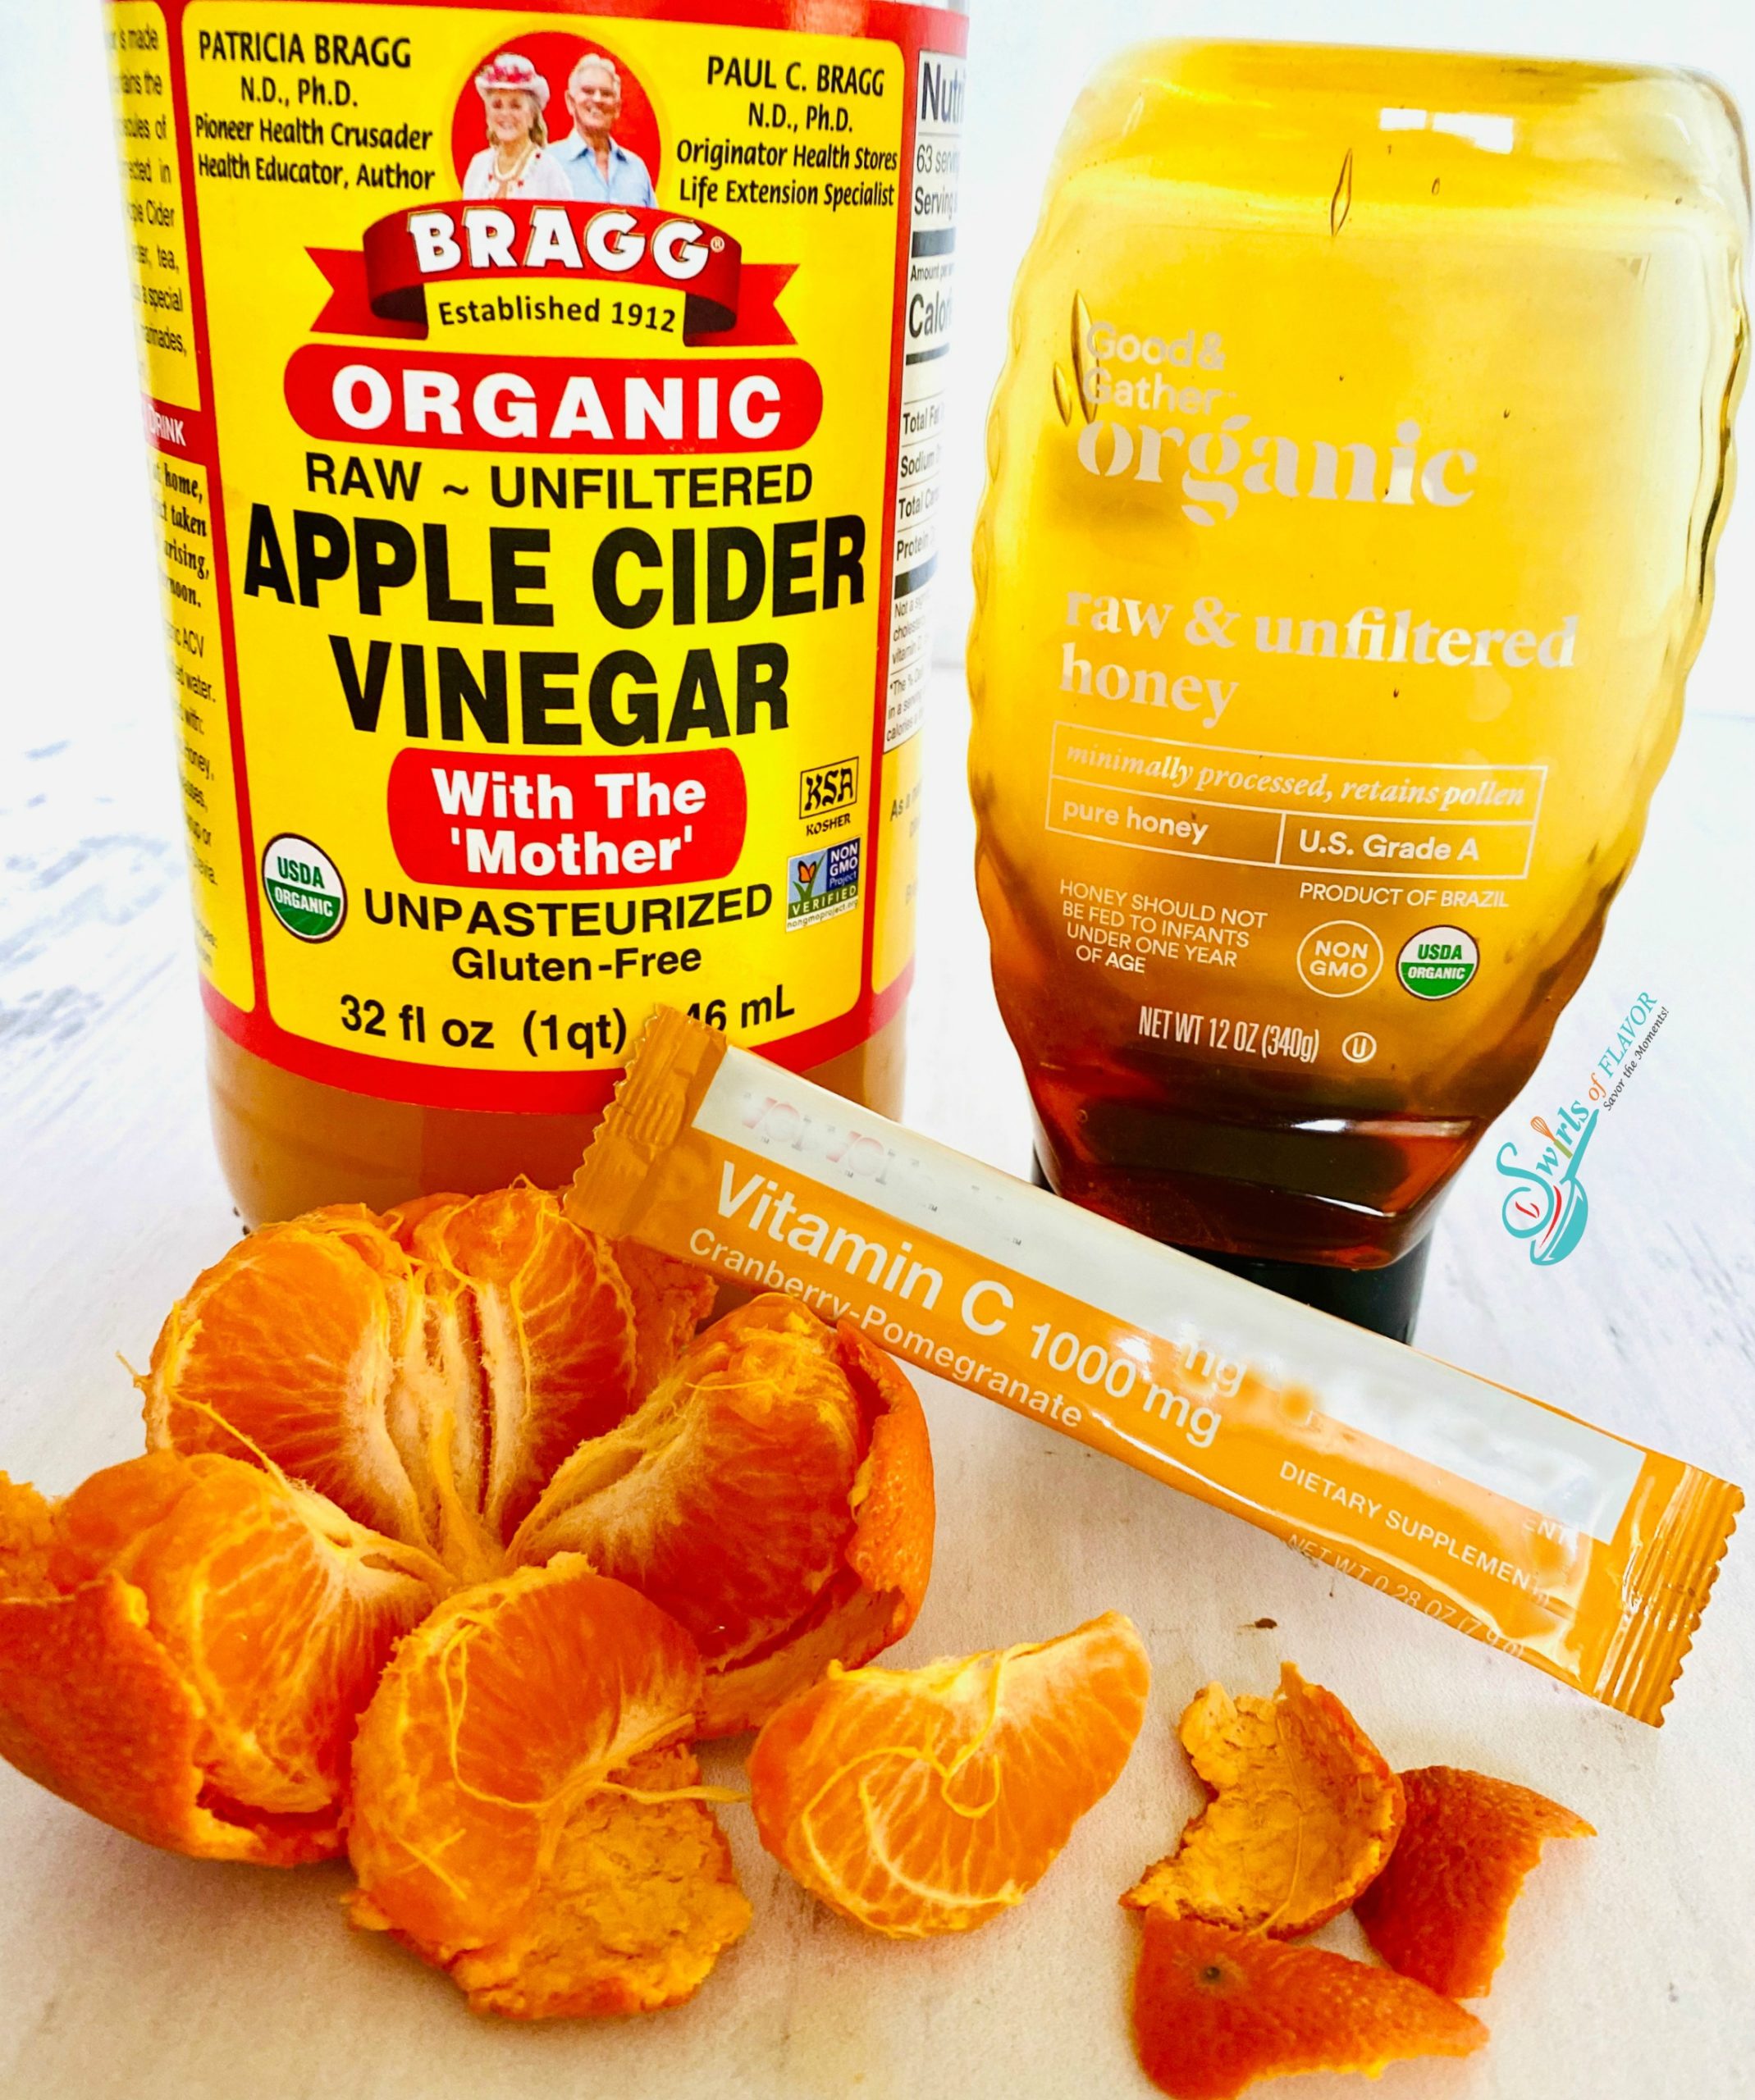 Ingredients for Vitamin C Drink